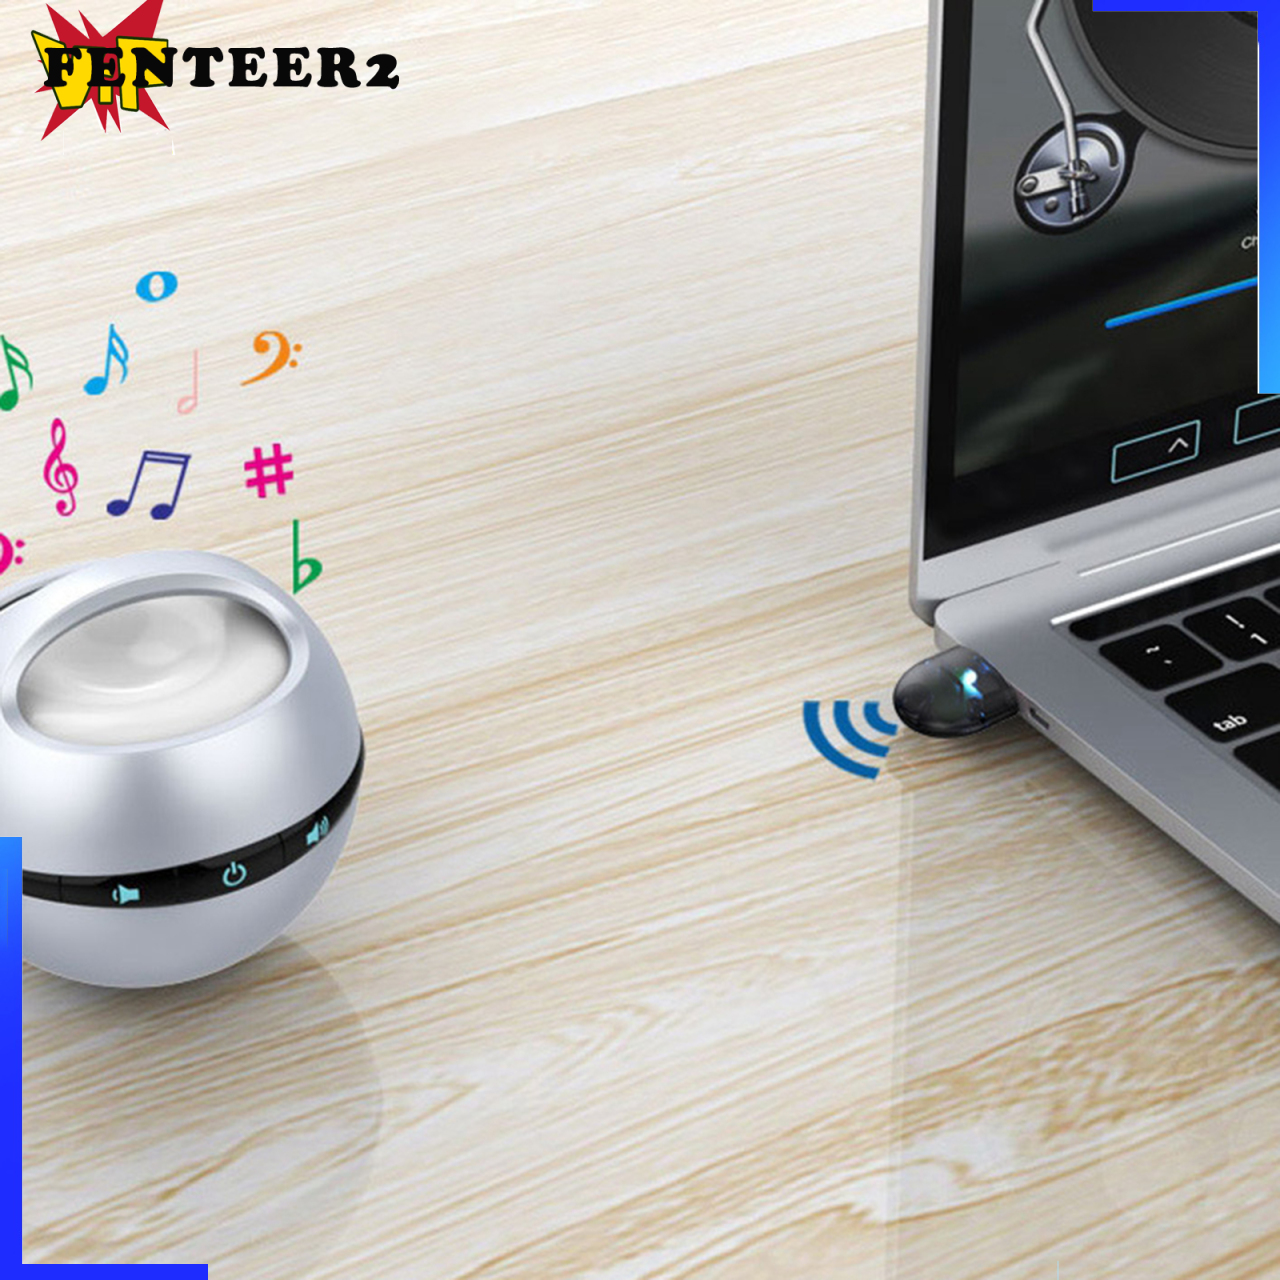 (Fenteer2 3c) Bluetooth Transmitter Mp3 Player Adapter Usb | BigBuy360 - bigbuy360.vn